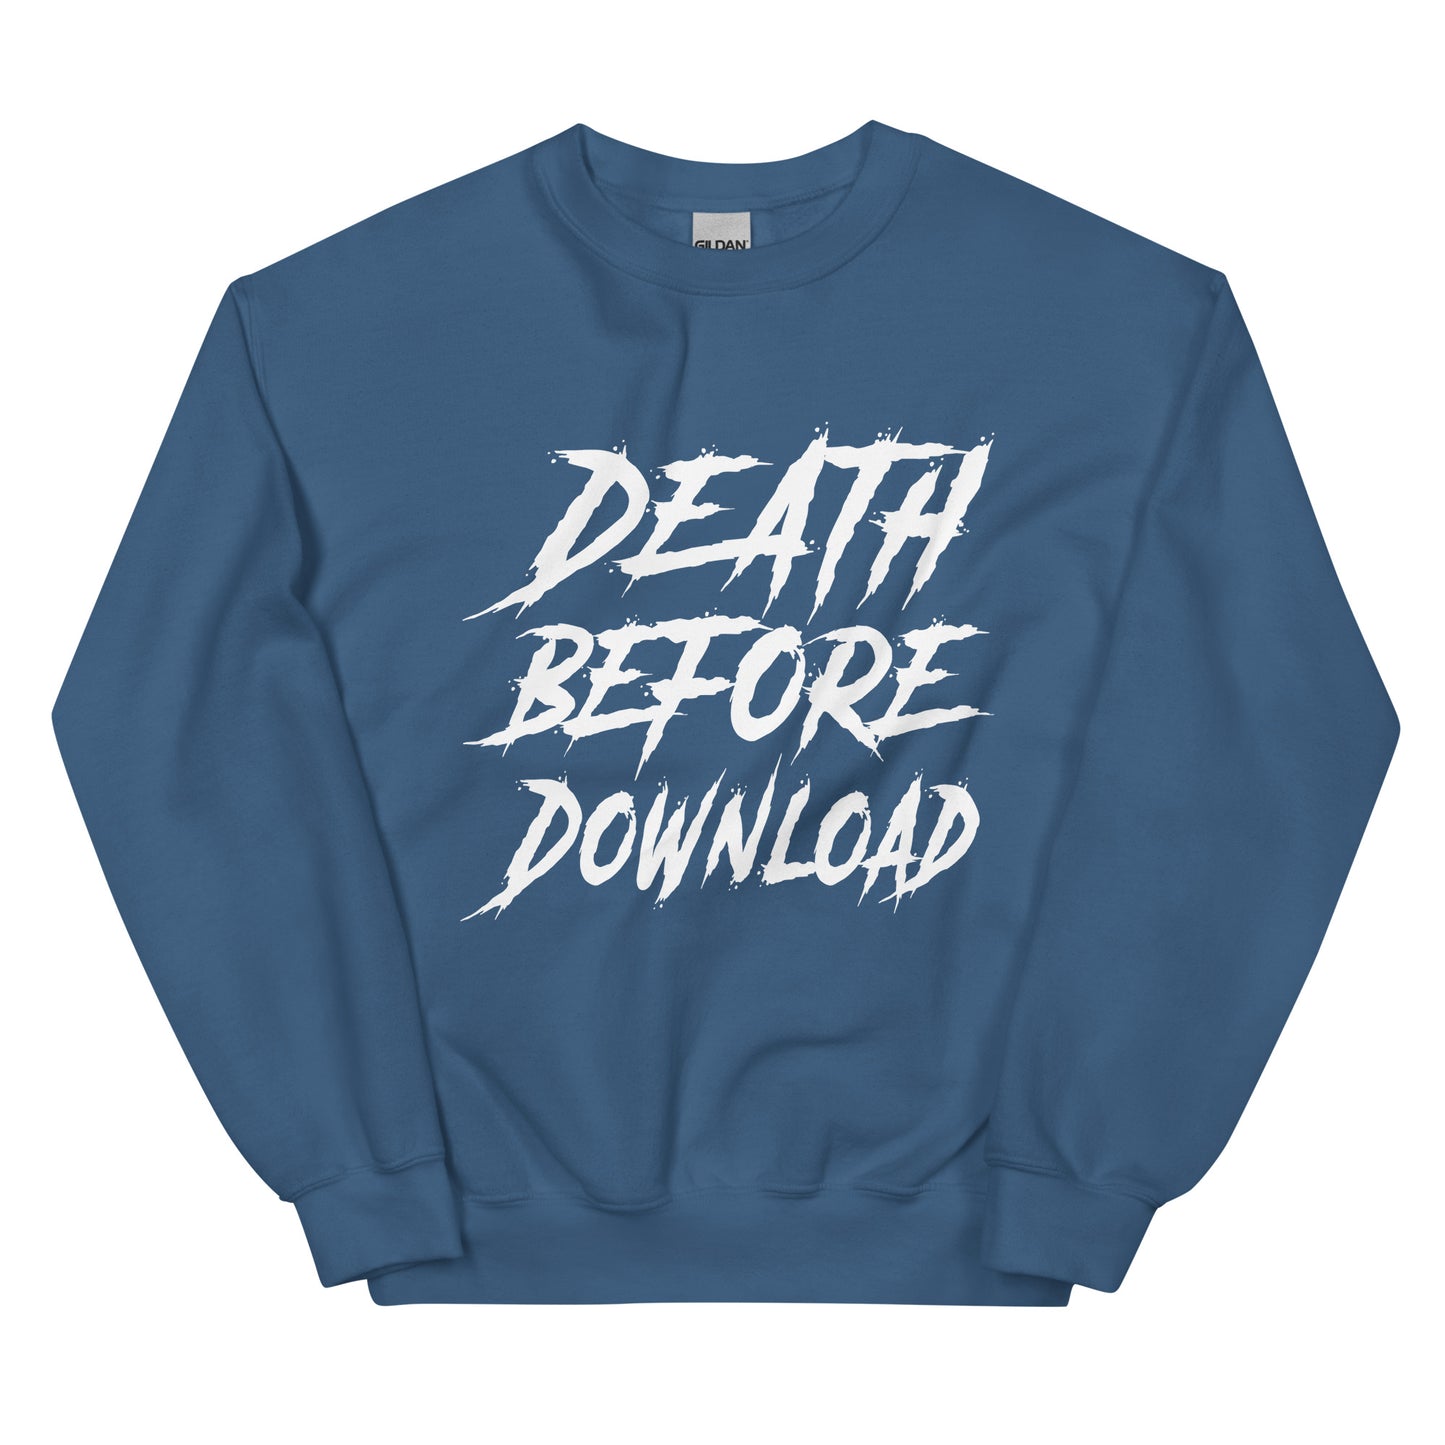 Death before download whistler printed crewneck